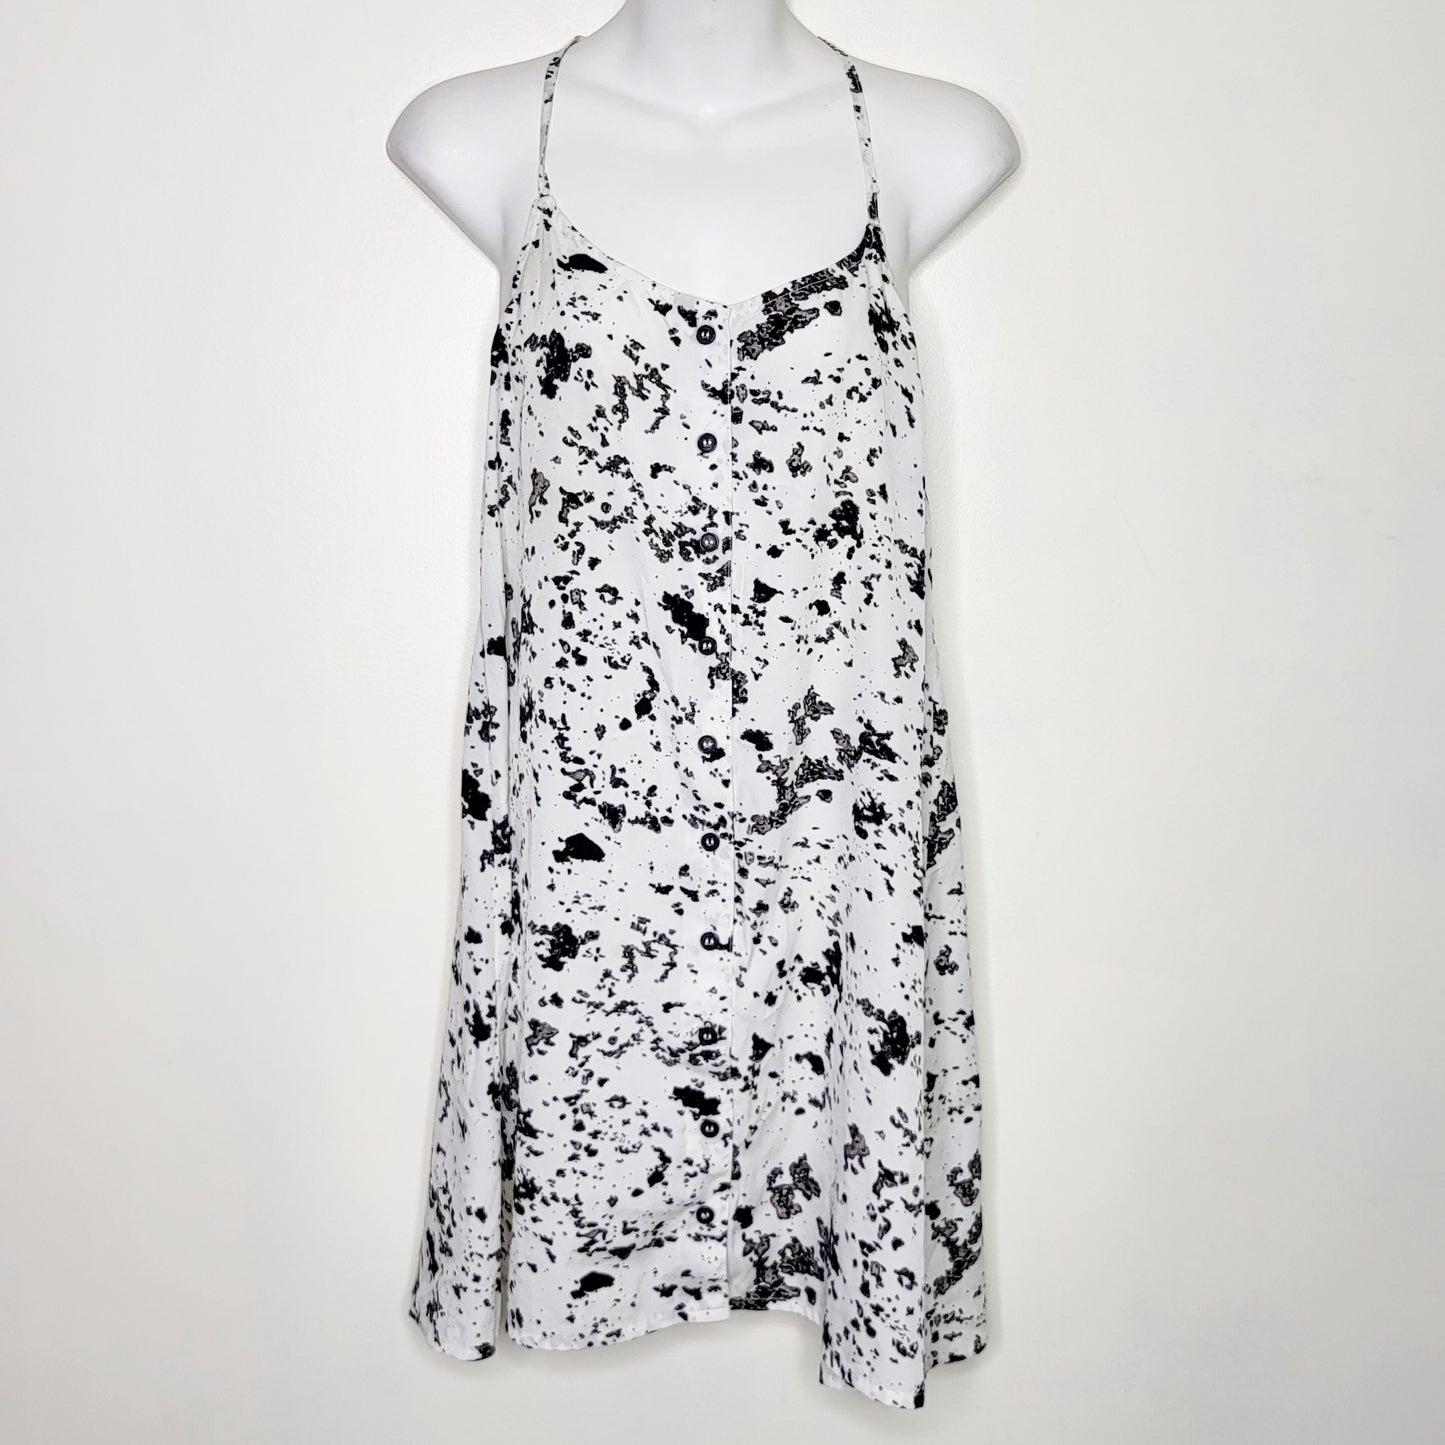 CSWRTZ1 - Hurley black and white splotch pattern sleeveless mini dress, size XS, good condition